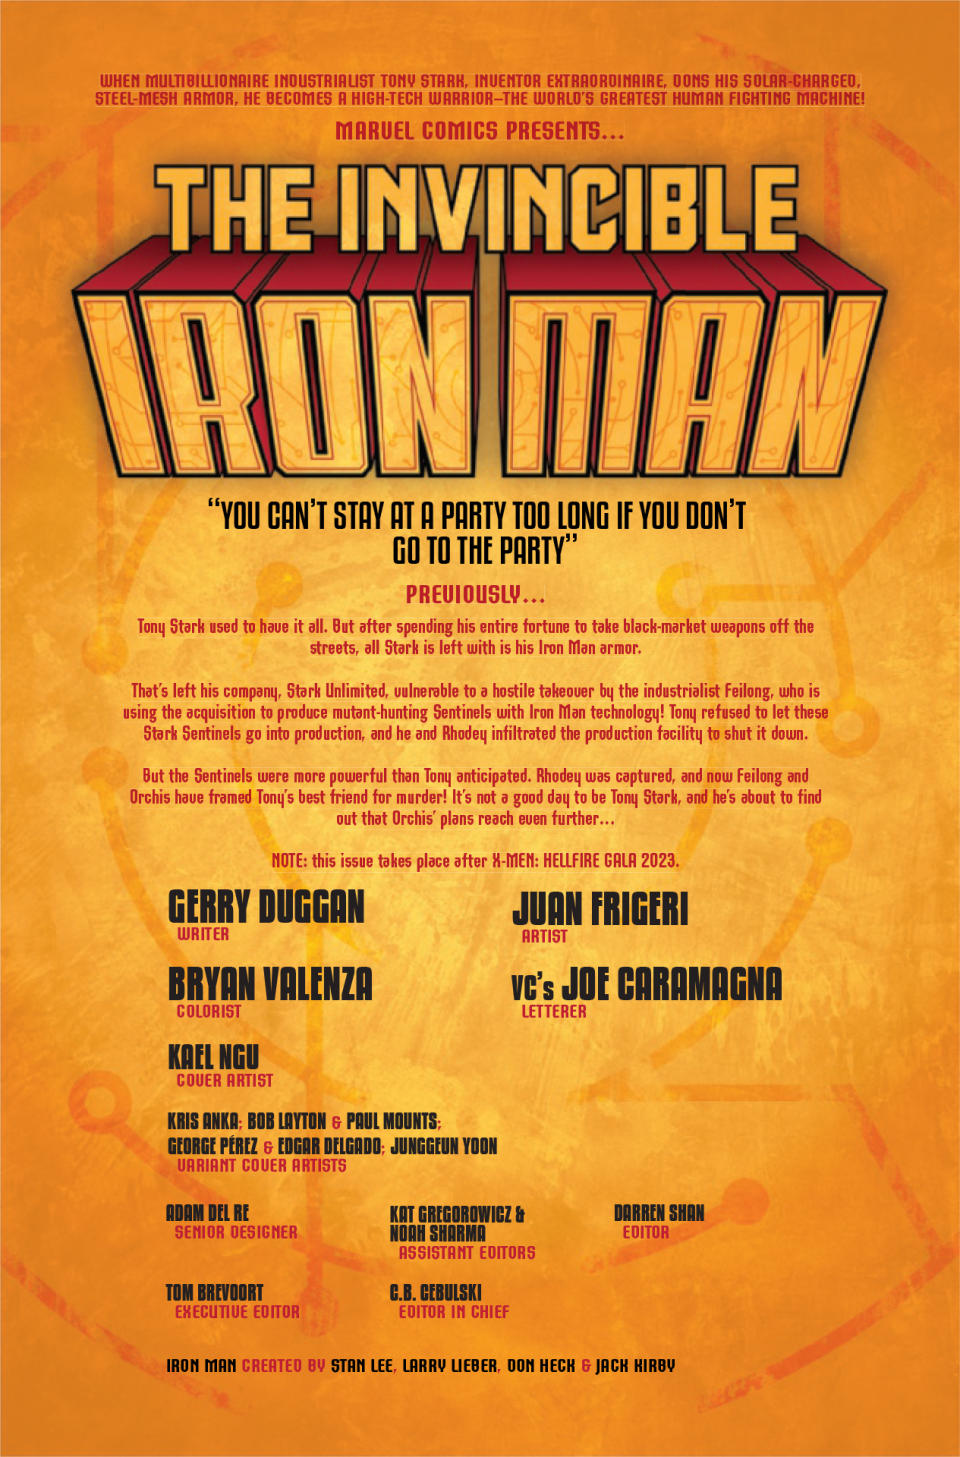 Invincible Iron Man #8 interior page